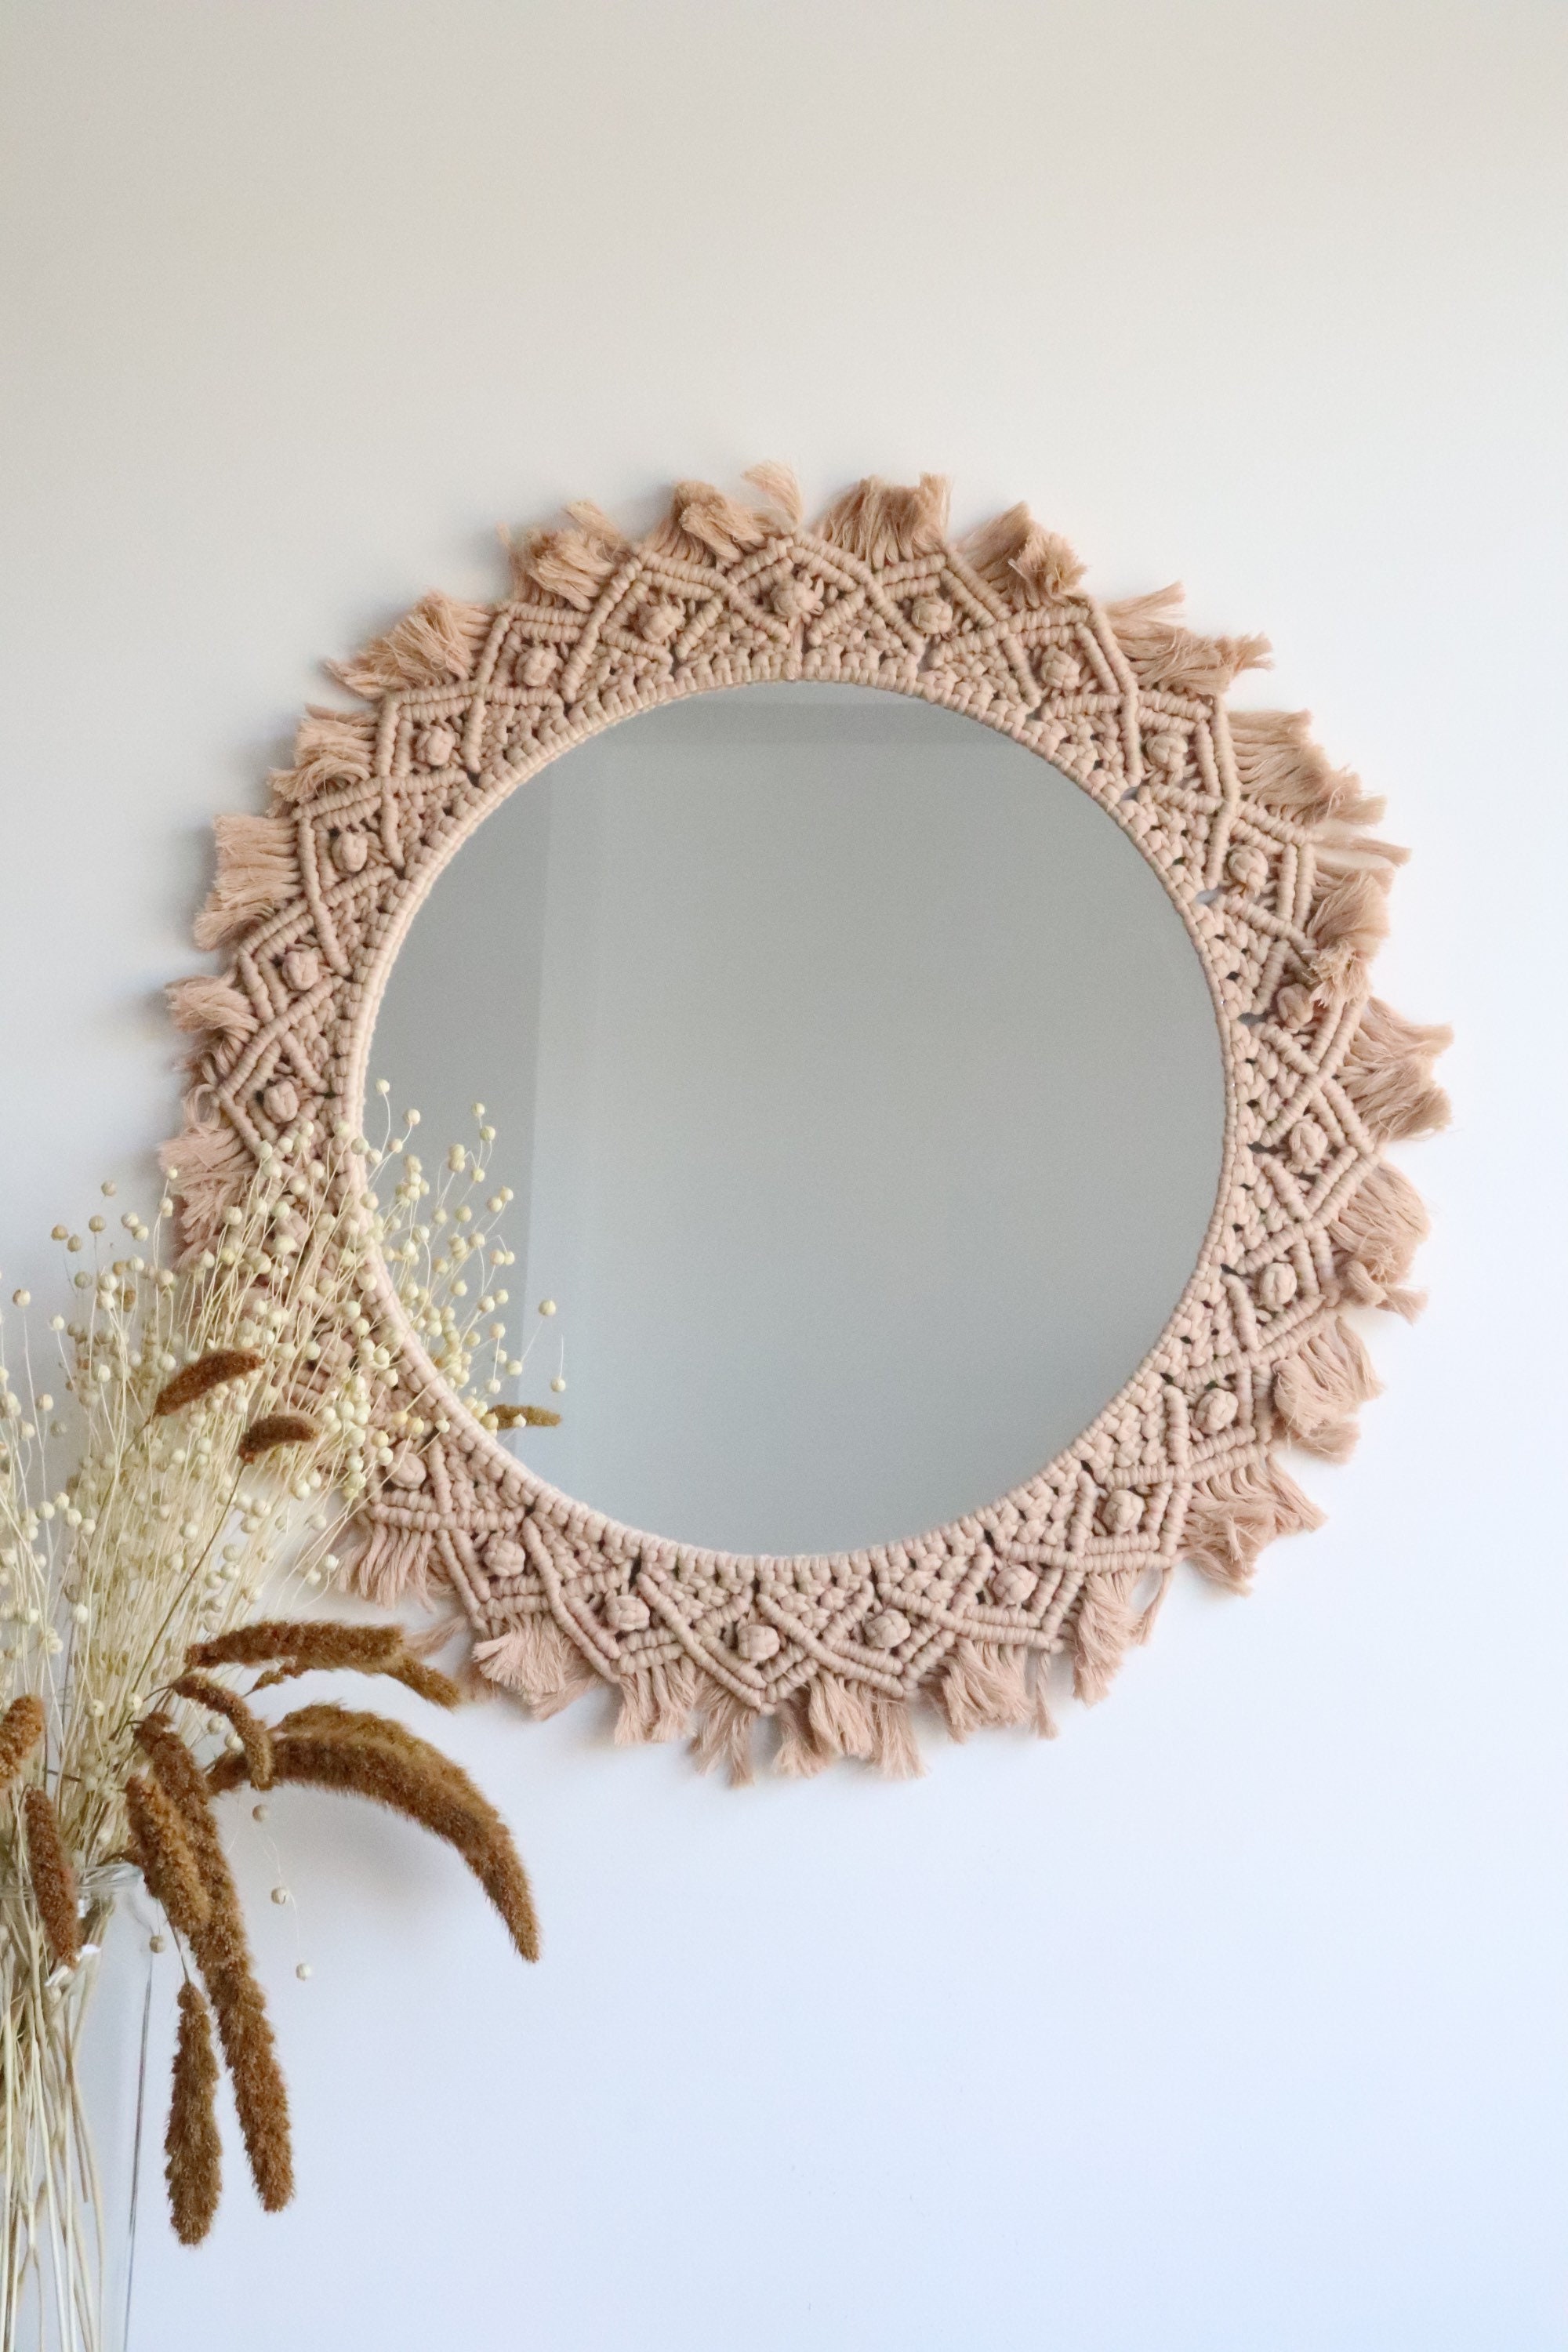 37 Circle Mosaic Mirror Round Mirror, Wall Mirror,bathroom  Mirror,decorative Mirror,mirror for Wall Decor,circle Mirror,small Mirror 